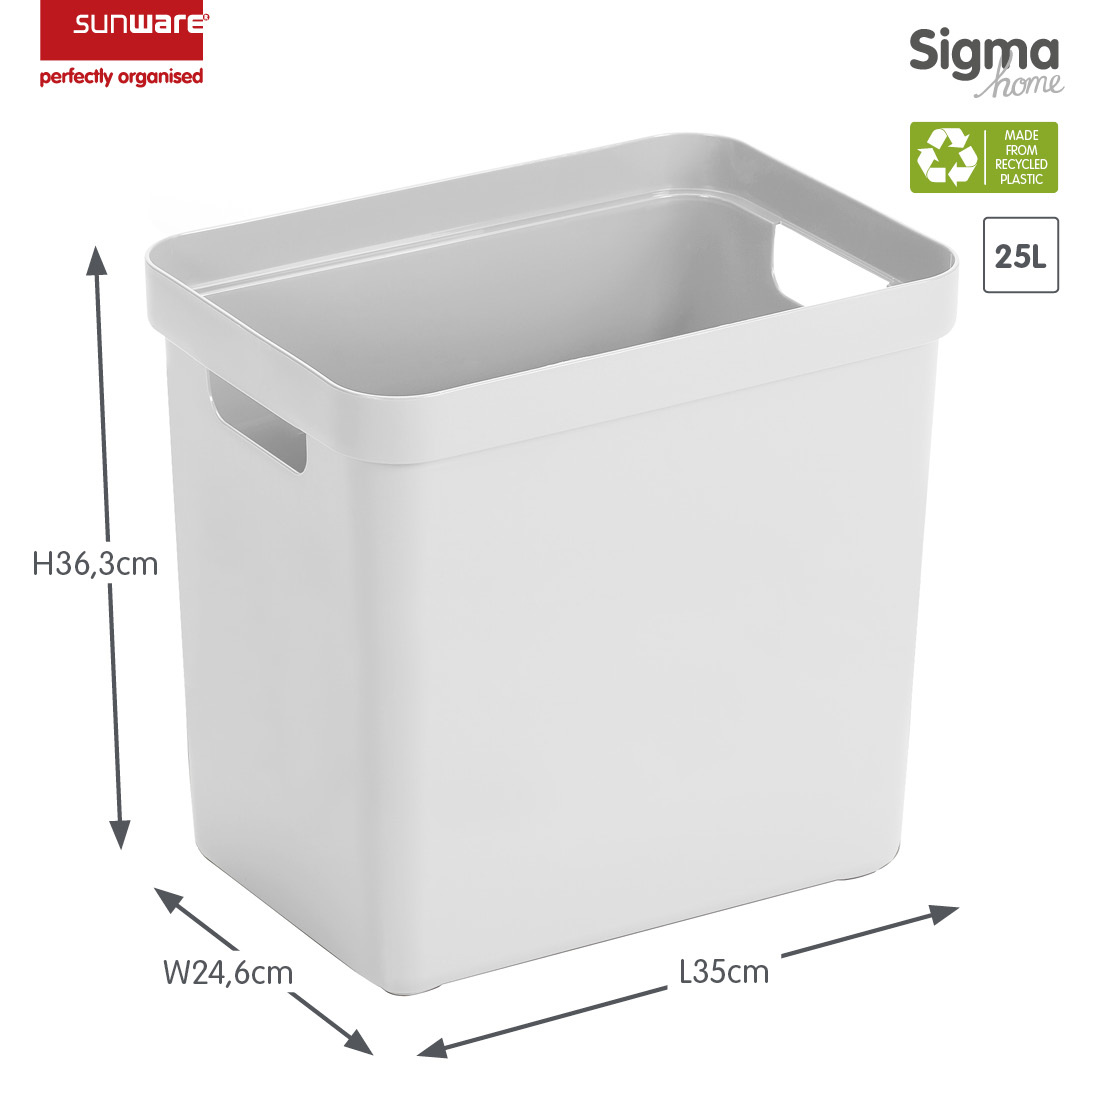 Sigma home storage box 25L white